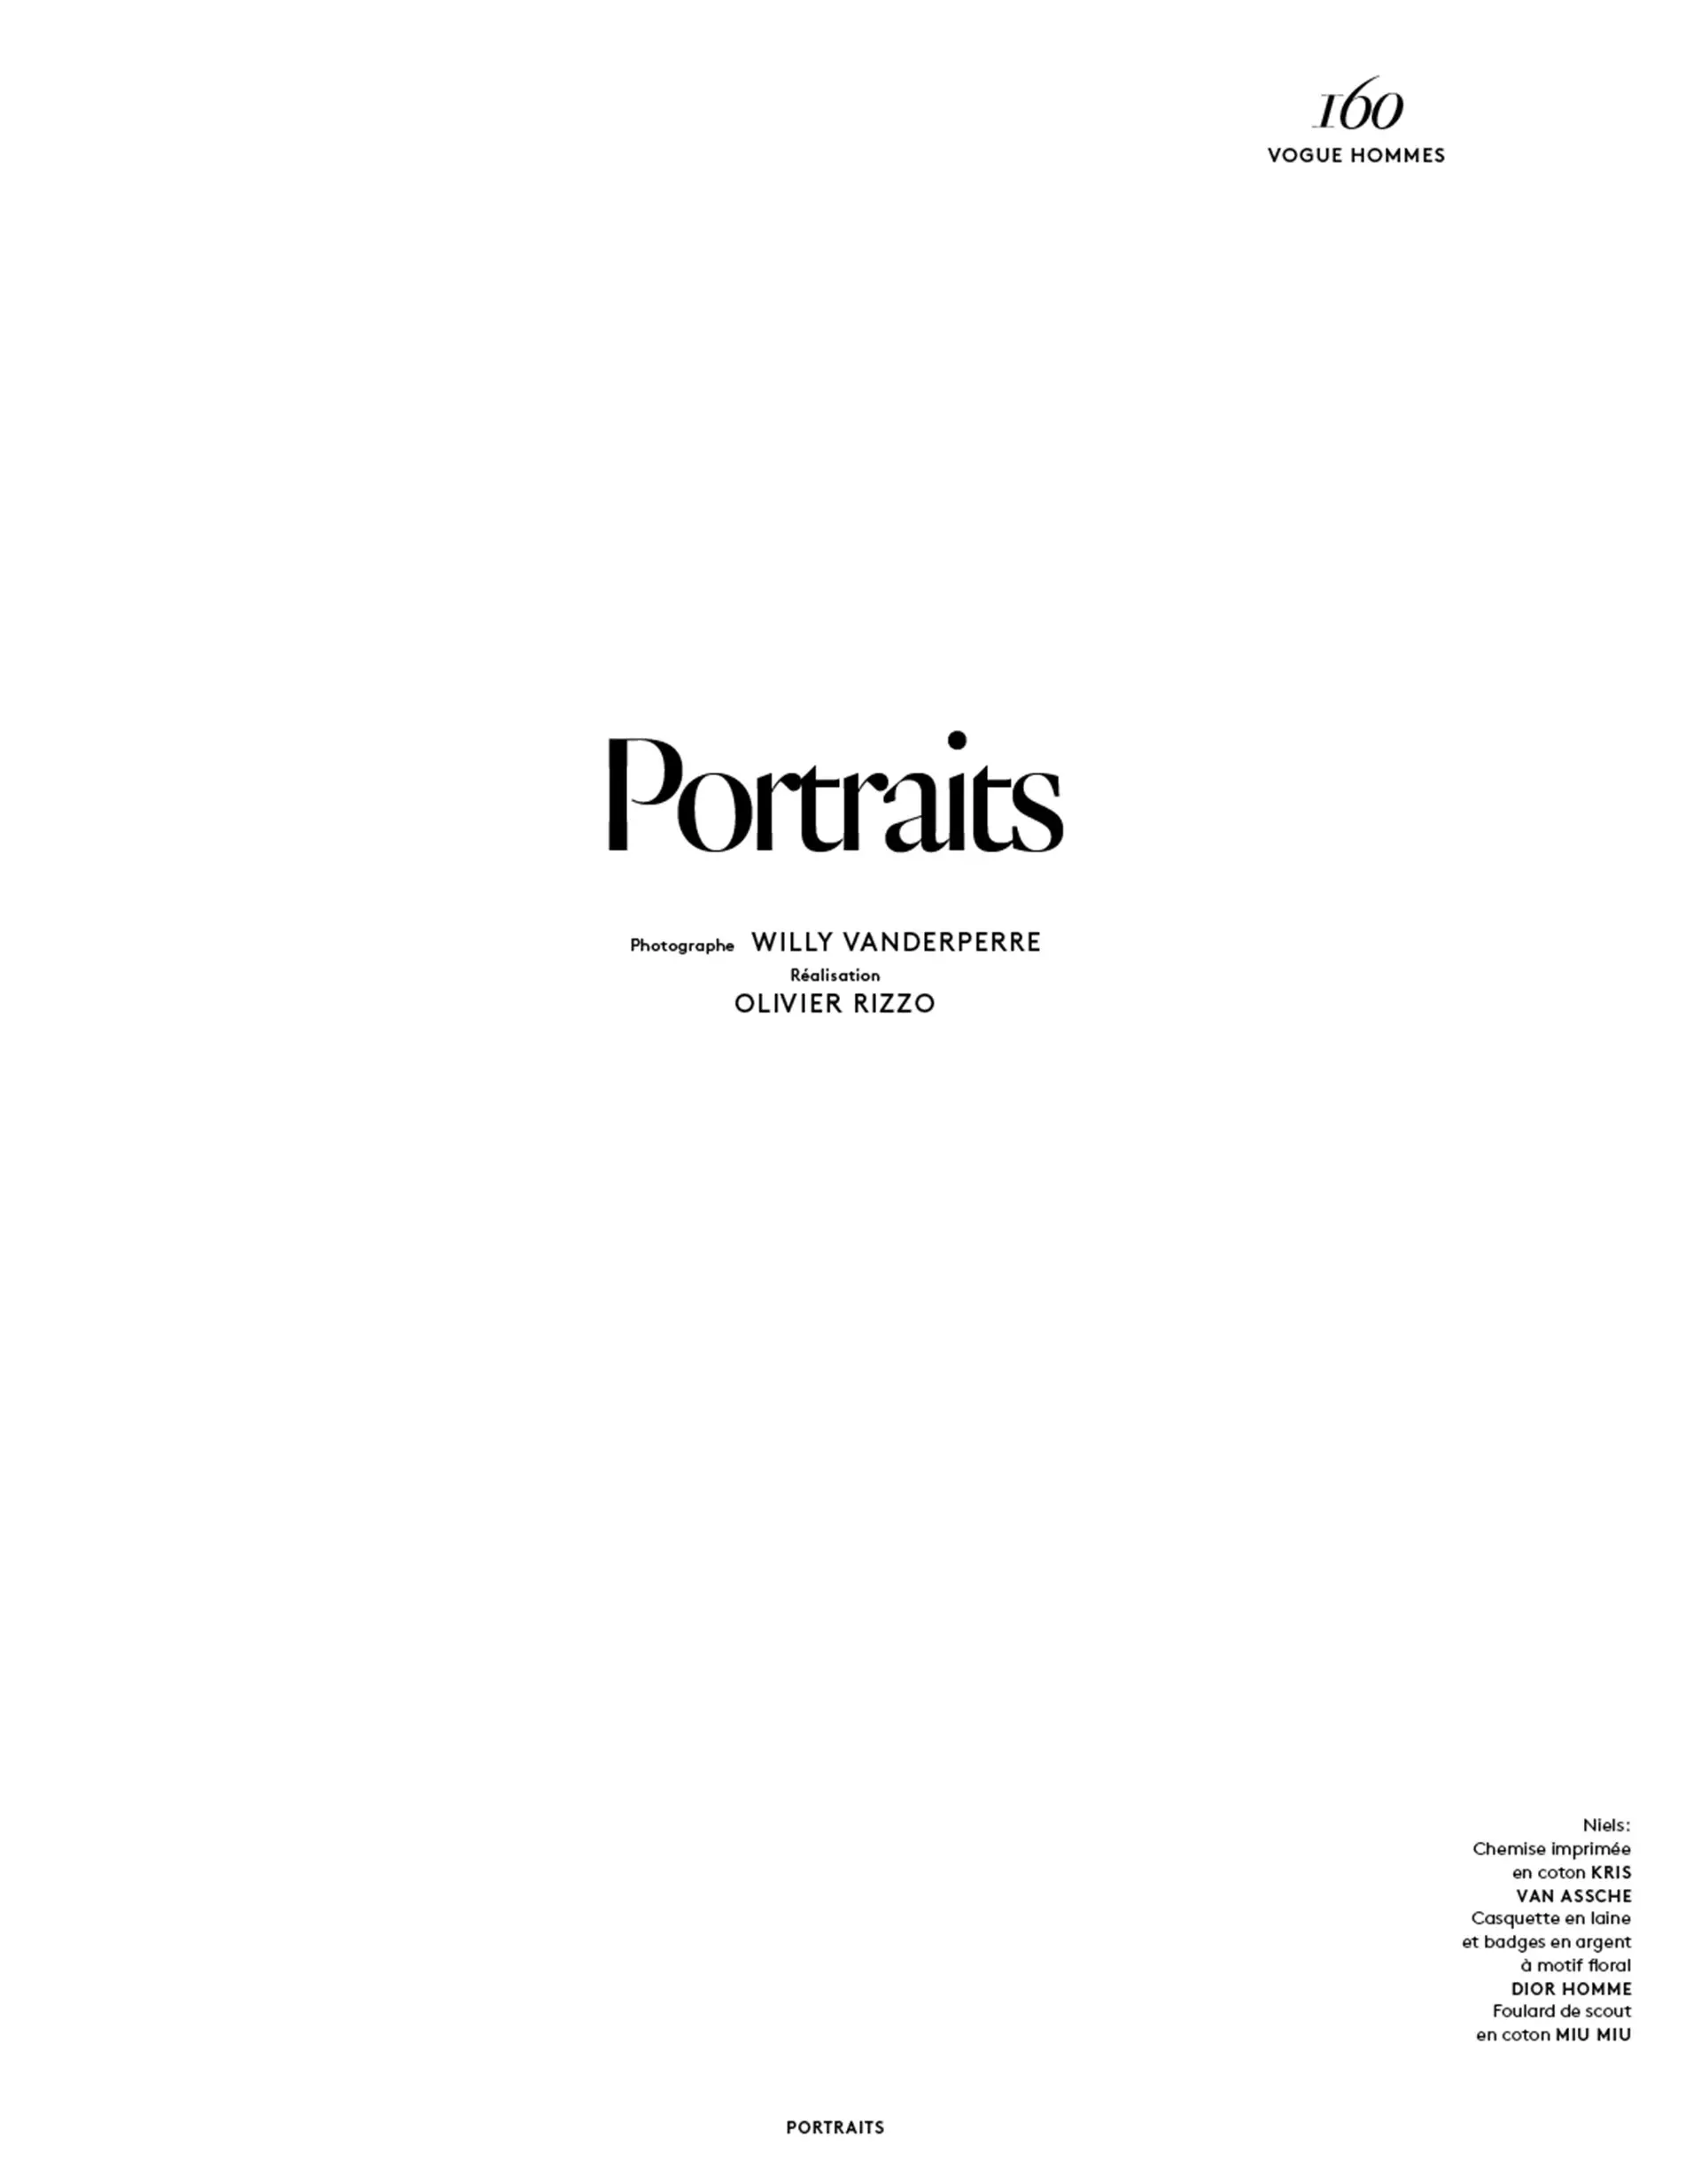 Vogue Hommes International S/S 2015: Portraits